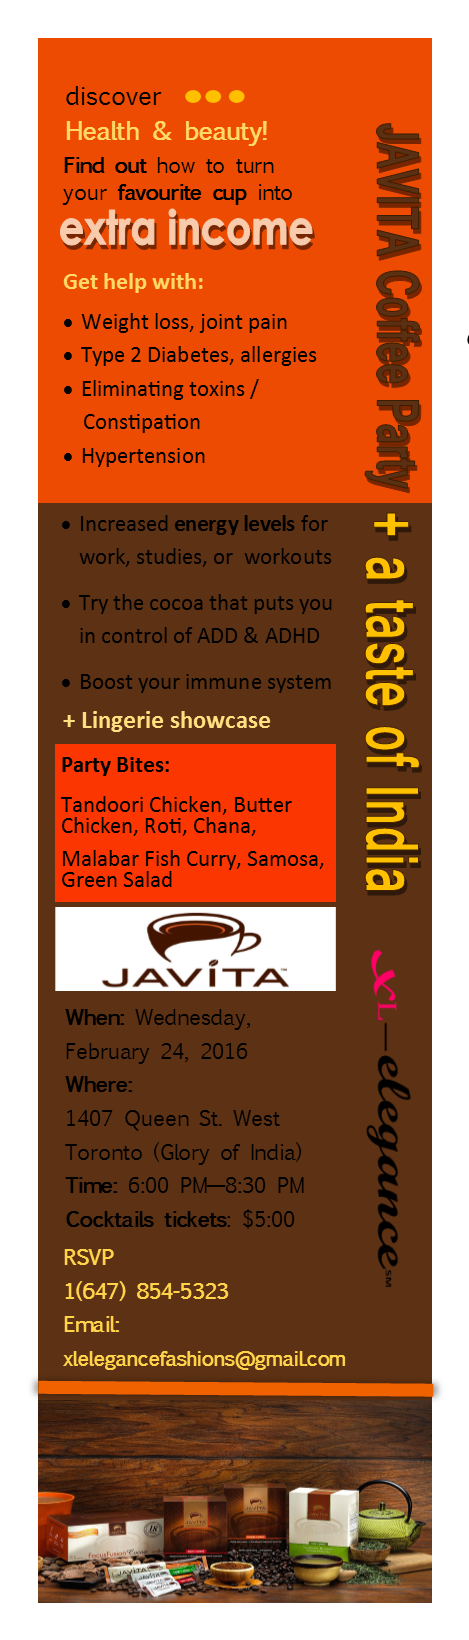 Taste of India Javita Party2